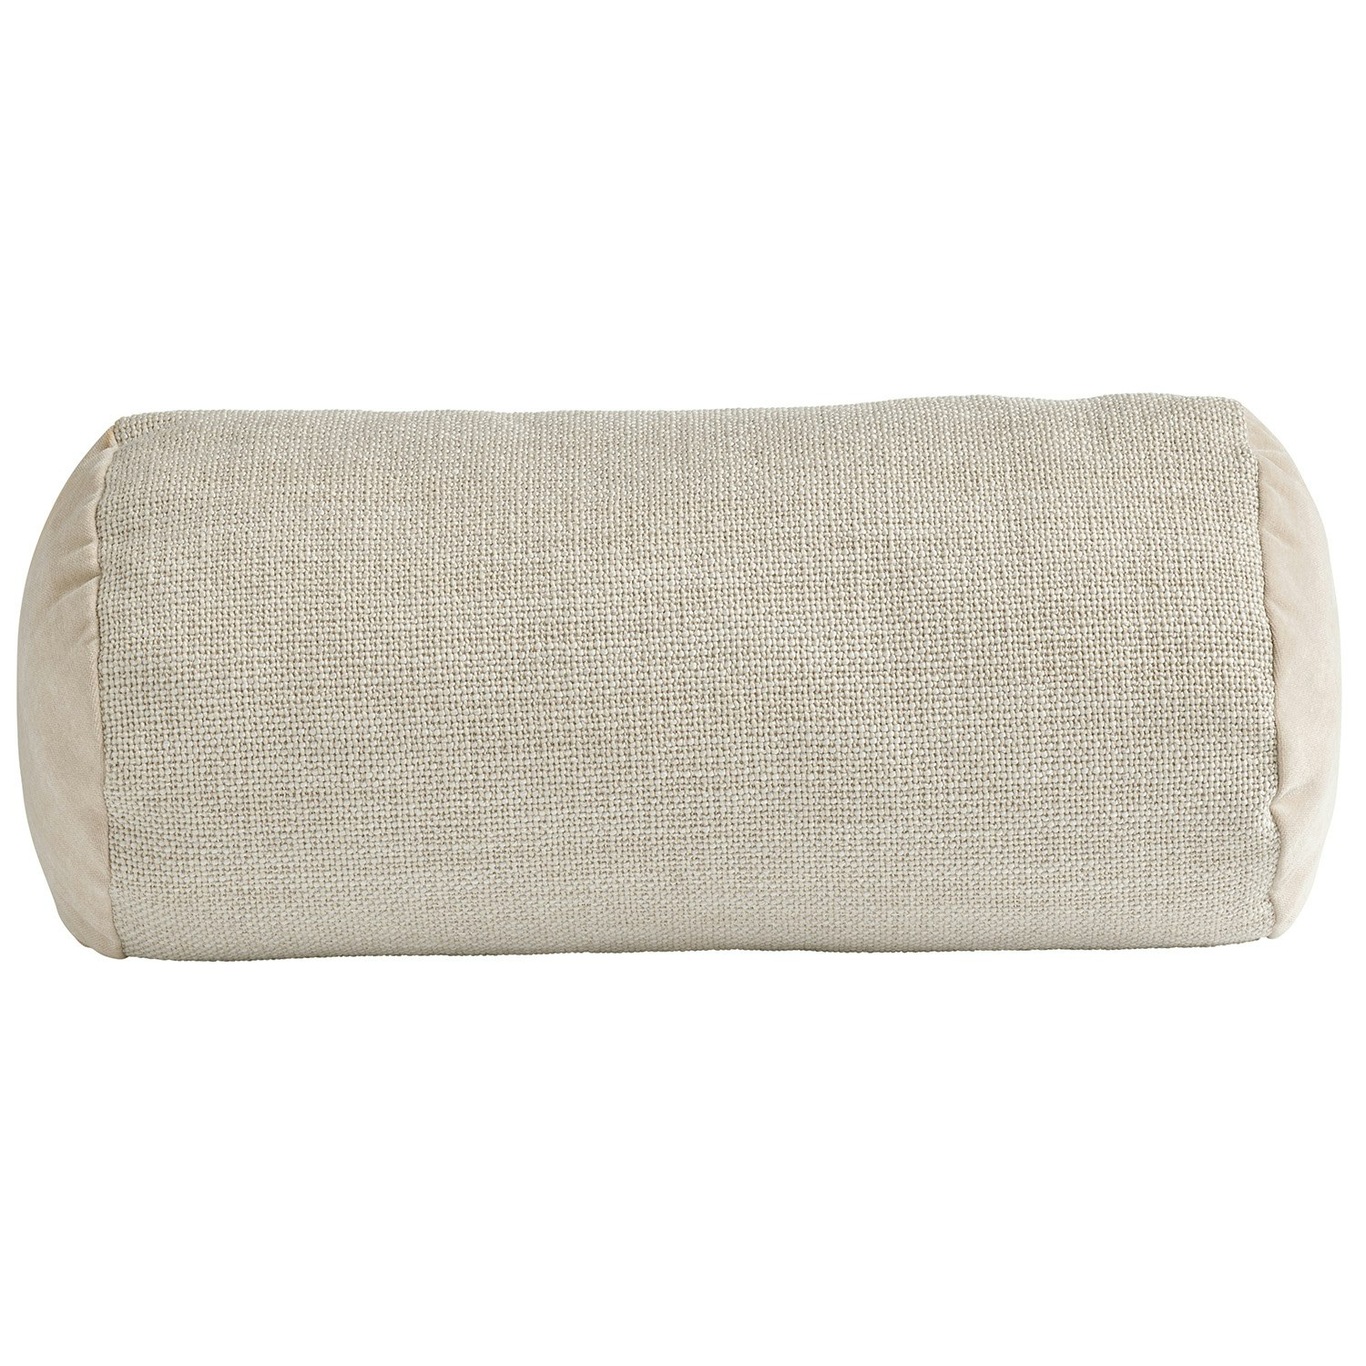 Barbat Cushion Cover Sand, 25x50 cm